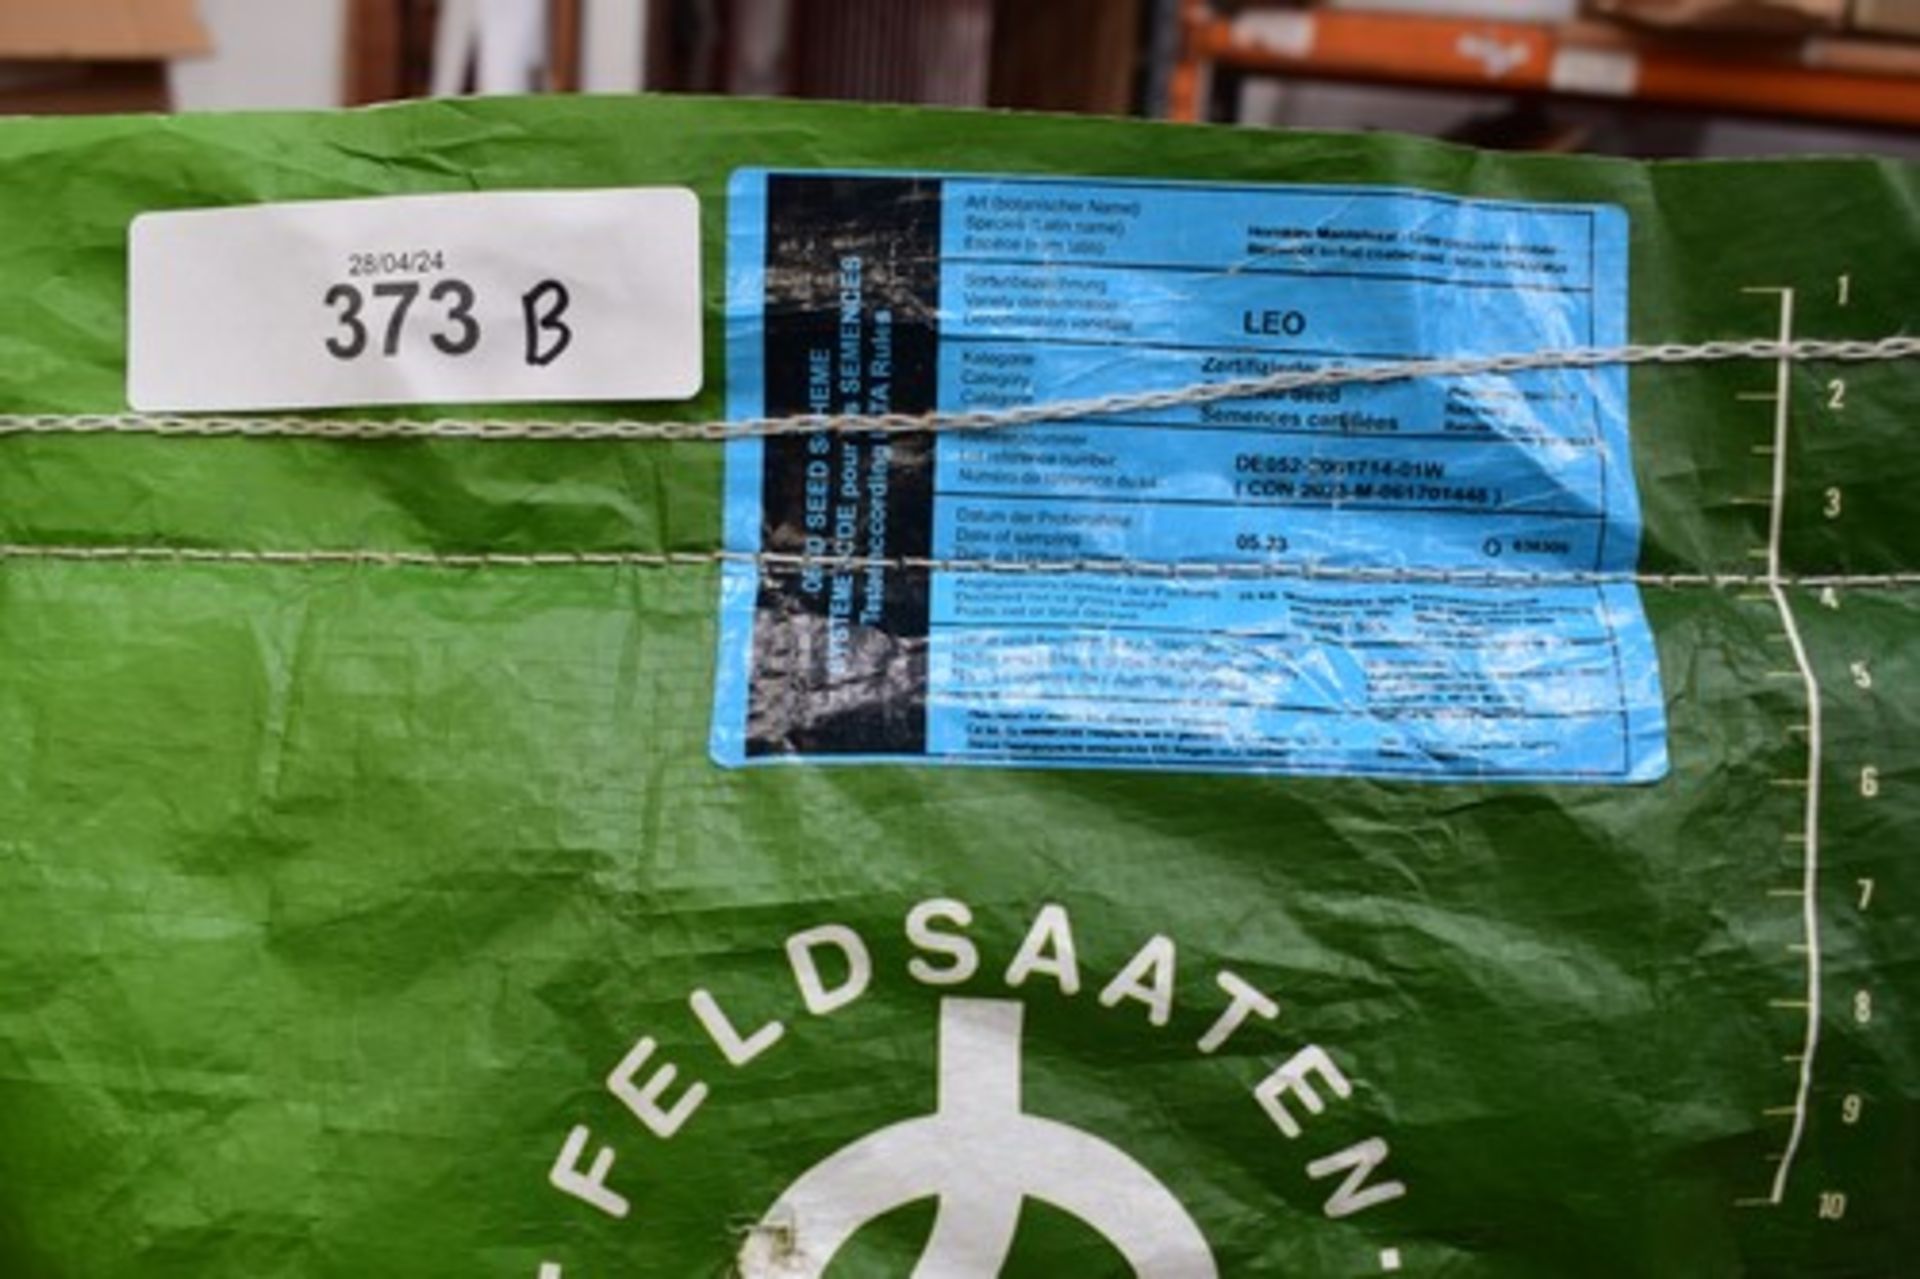 1 x 25kg sack of Forage agricultural seed mix and 2 x bag of Qualitats- Saatgut Leo seed (slight - Image 2 of 2